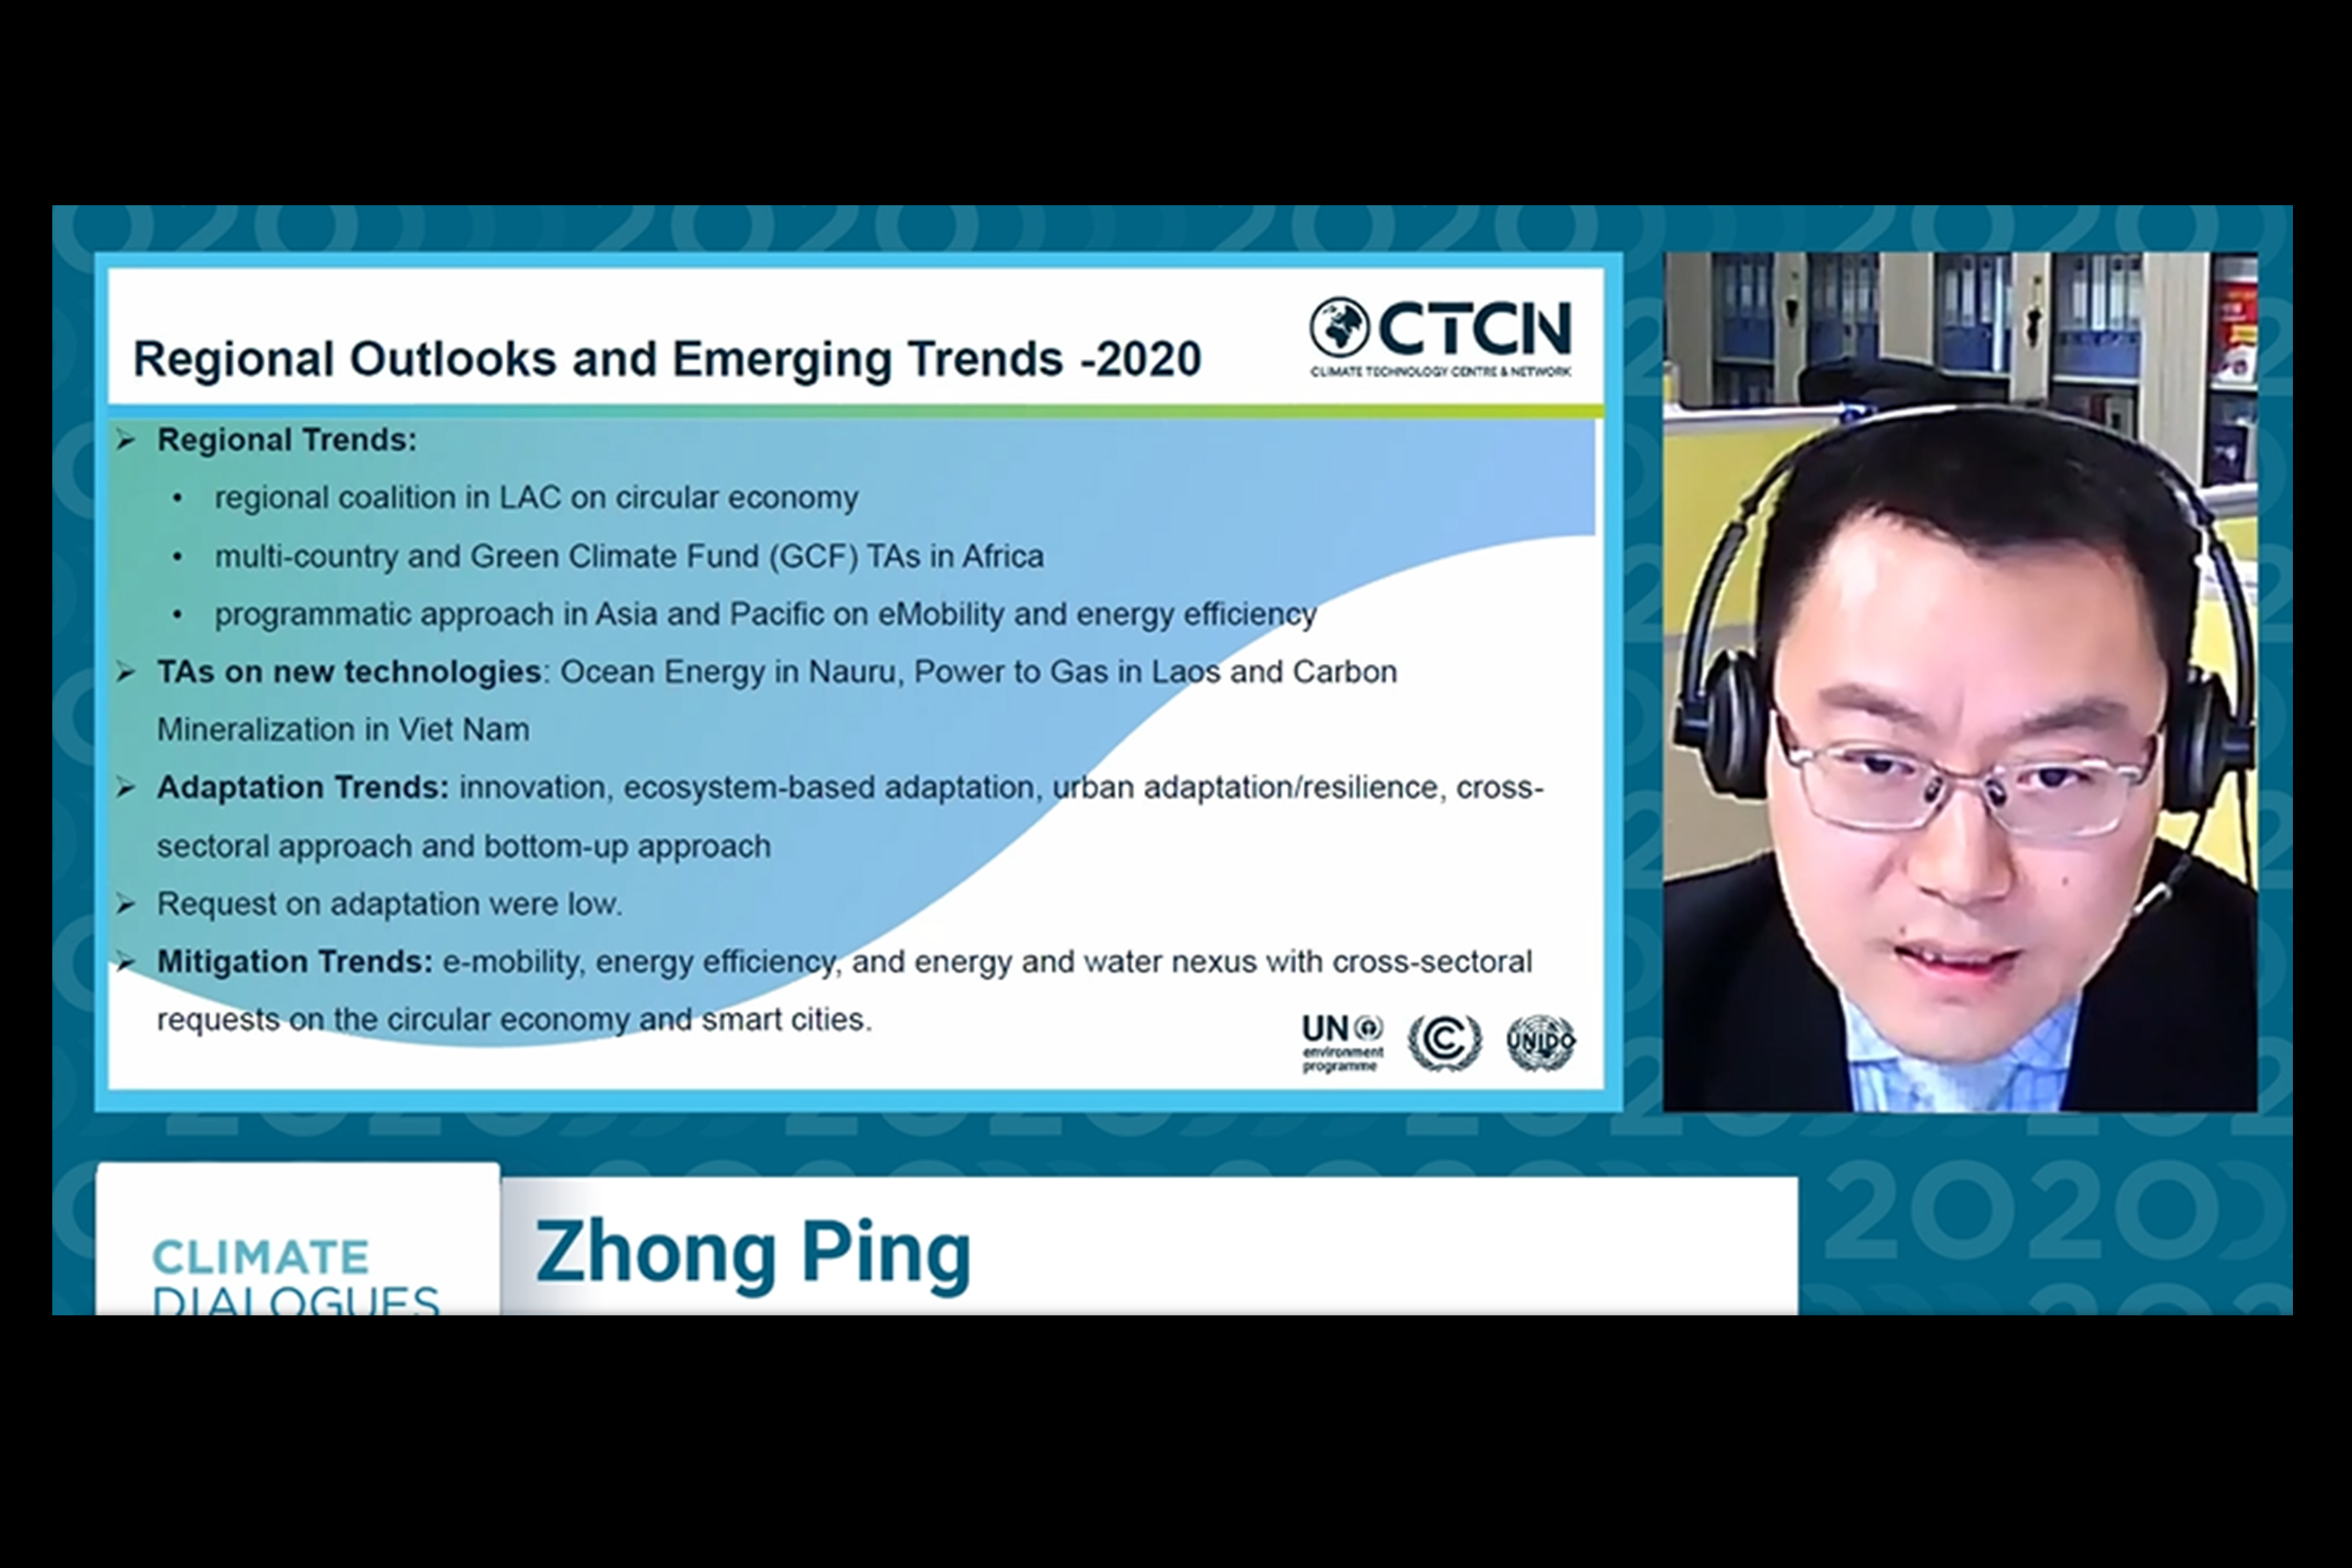 Zhong Ping, Chair of the CTCN Advisory Board